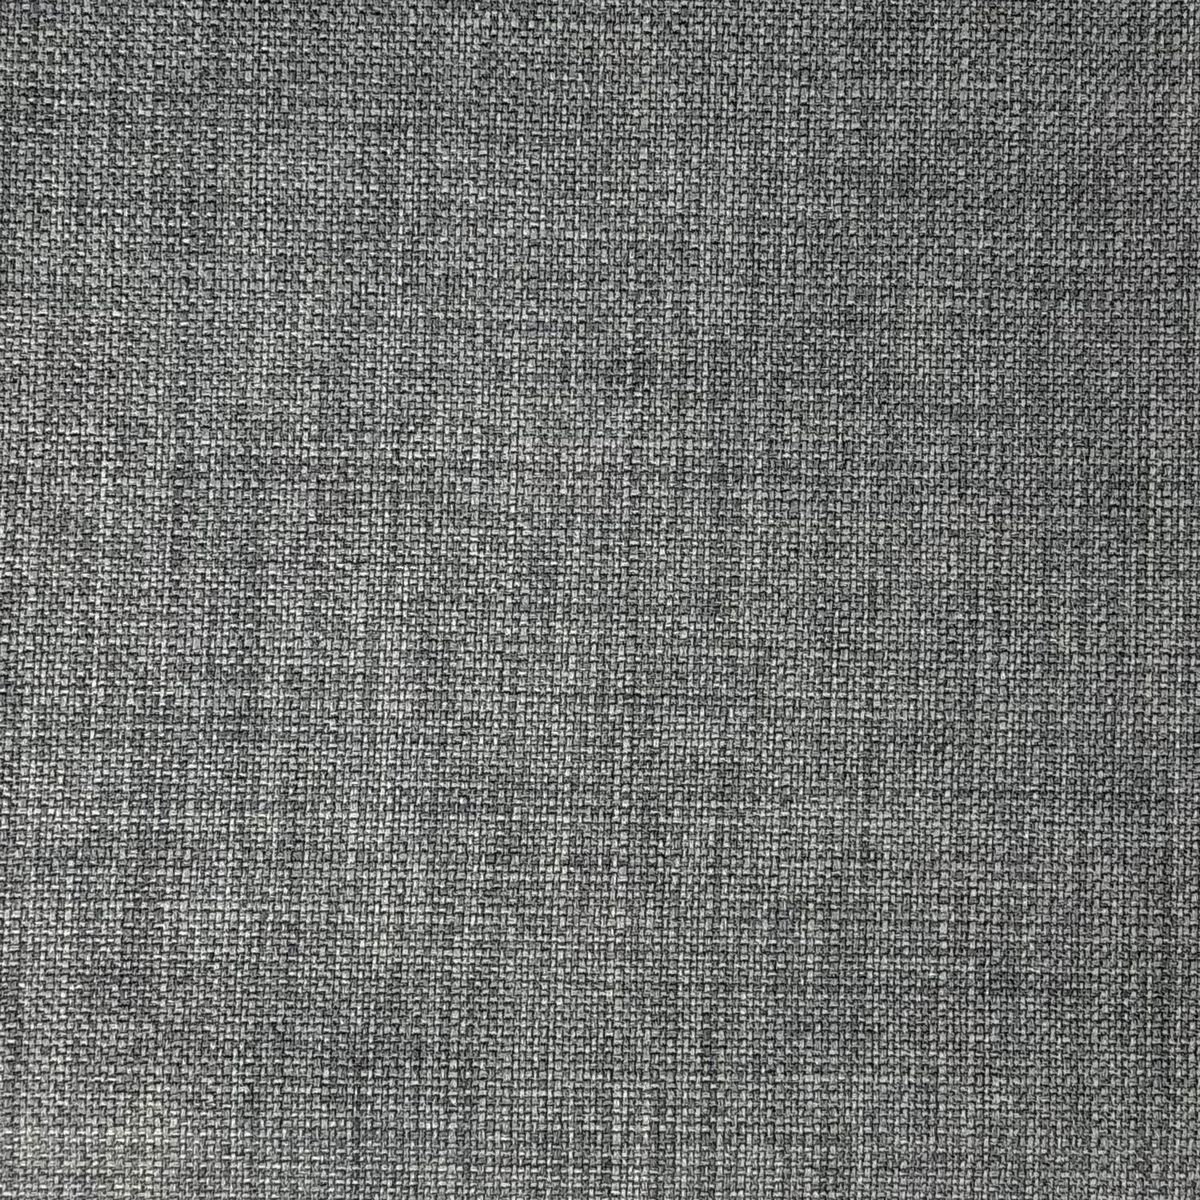 Linoso Charcoal Fabric by Chatham Glyn